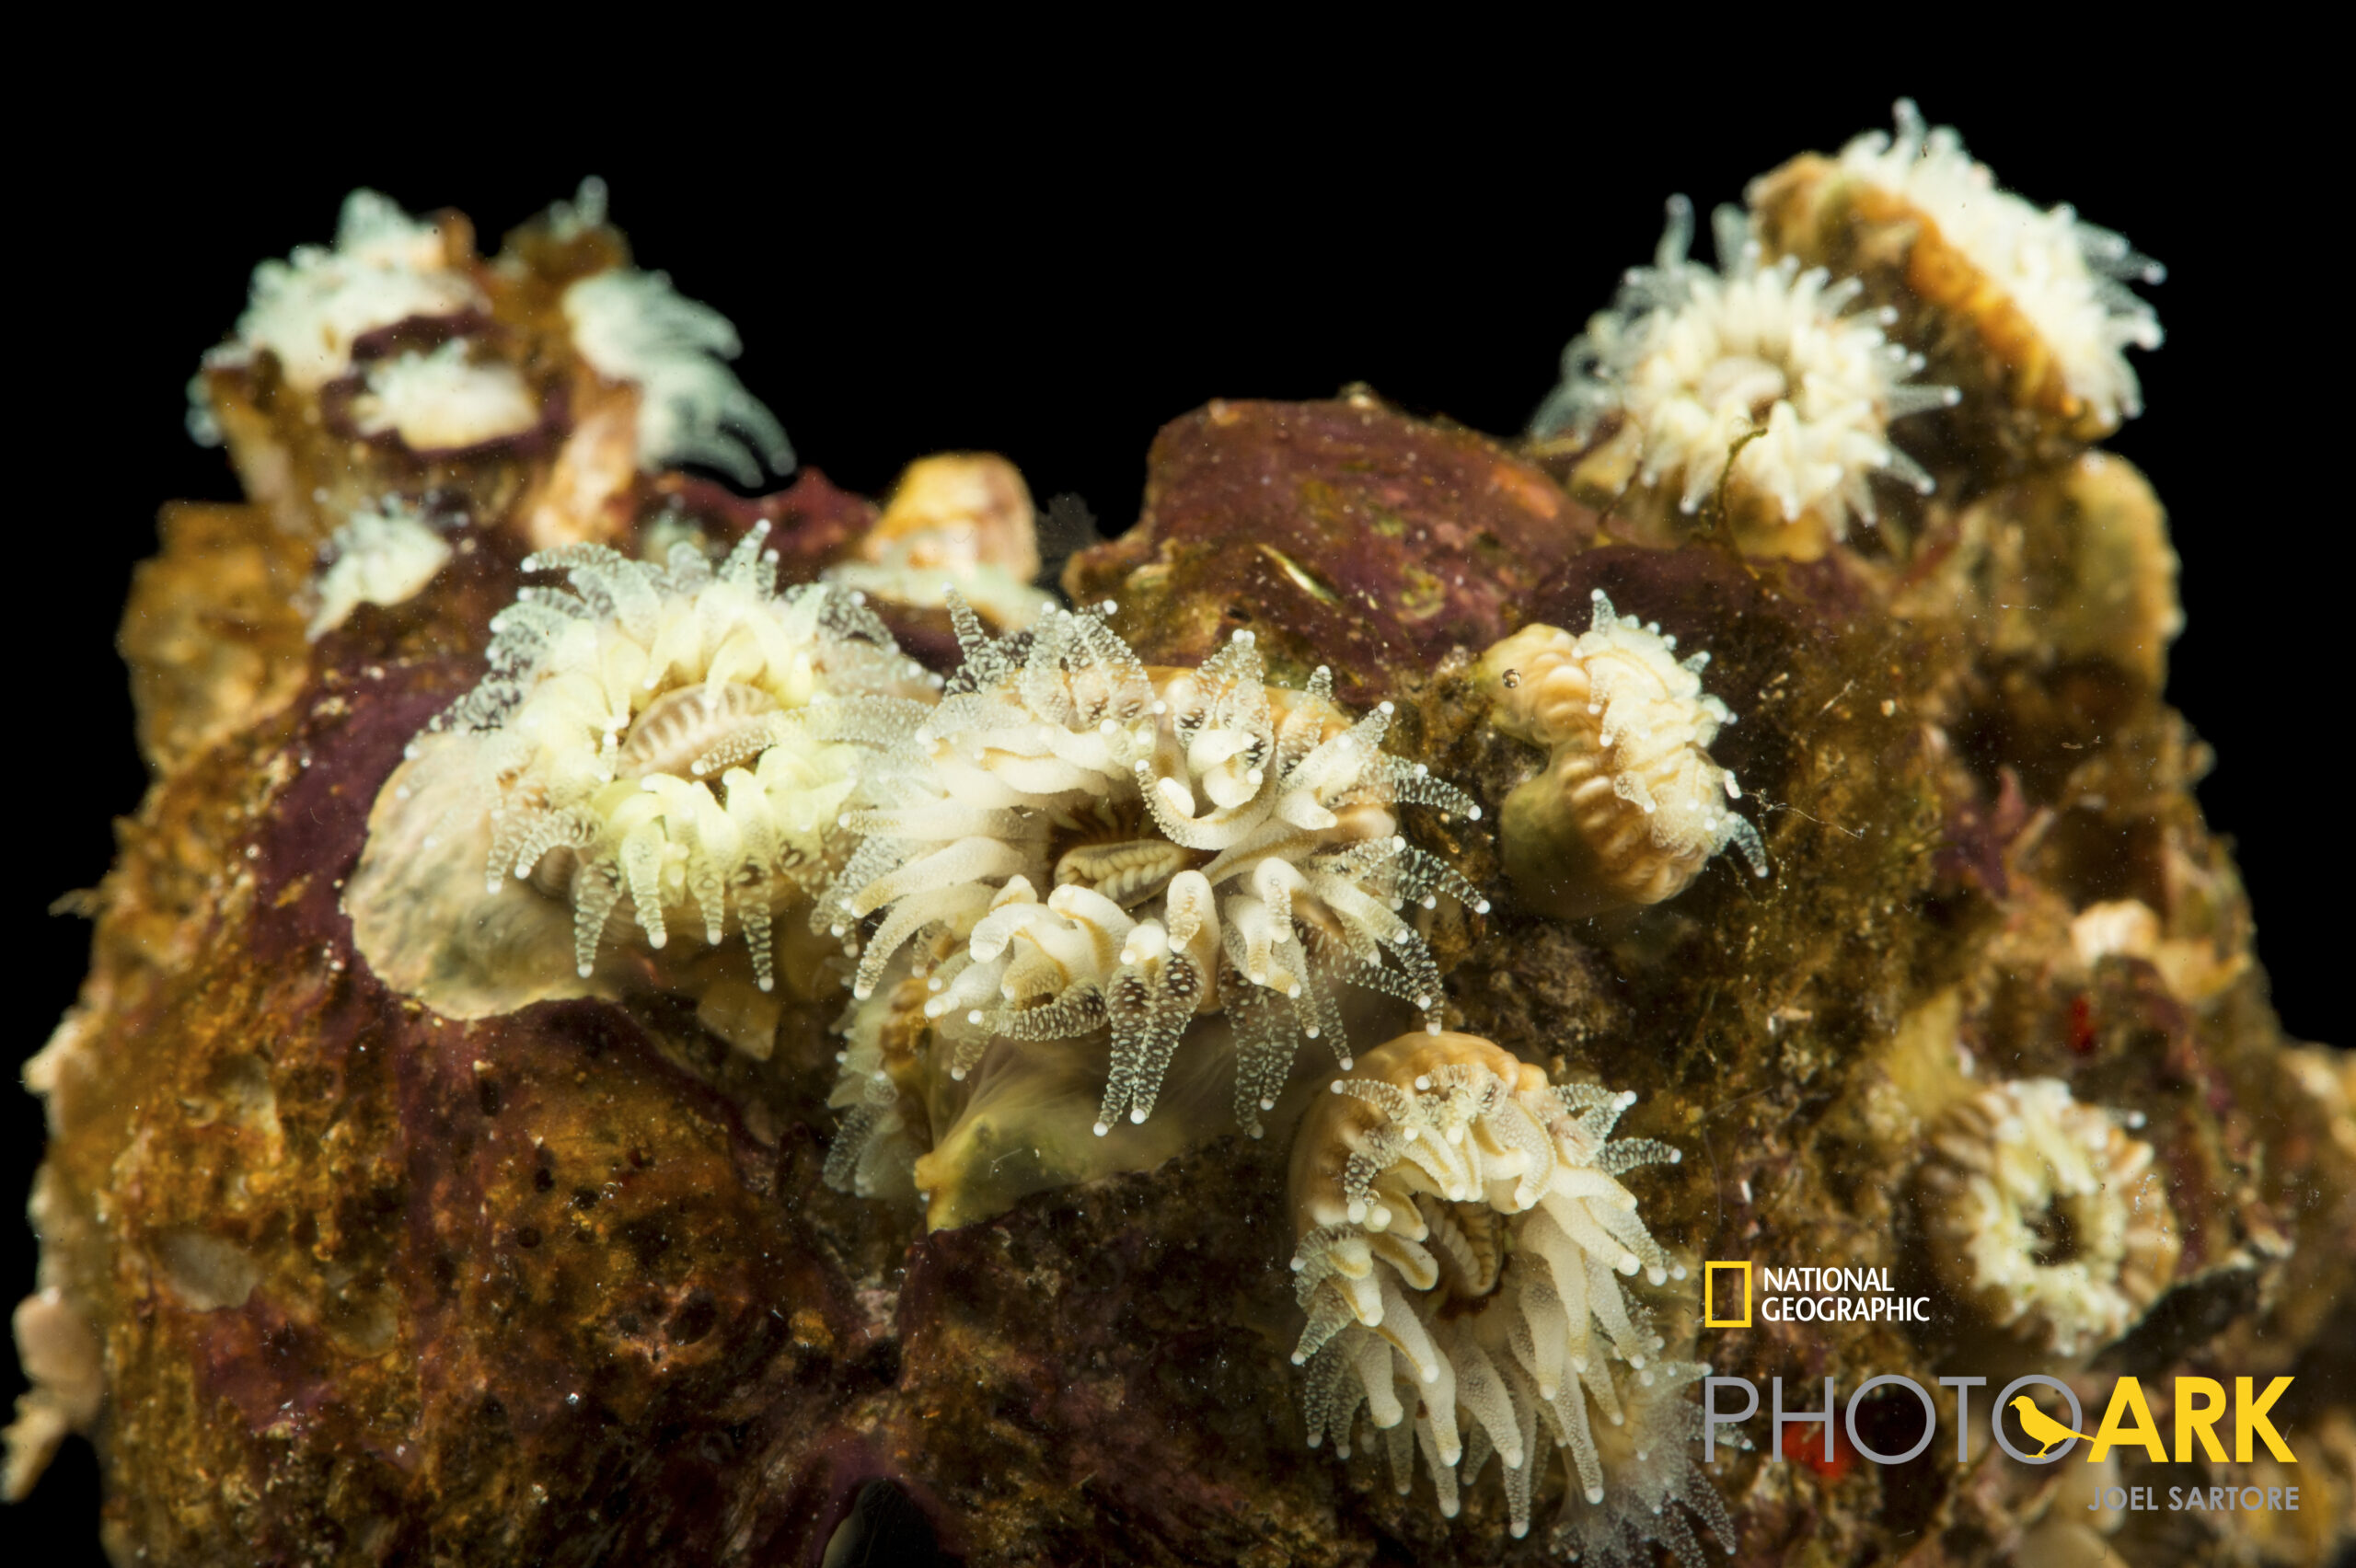 Rosebud coral (Phyllangia americana) at Gulf Specimen in Panacea, FL.